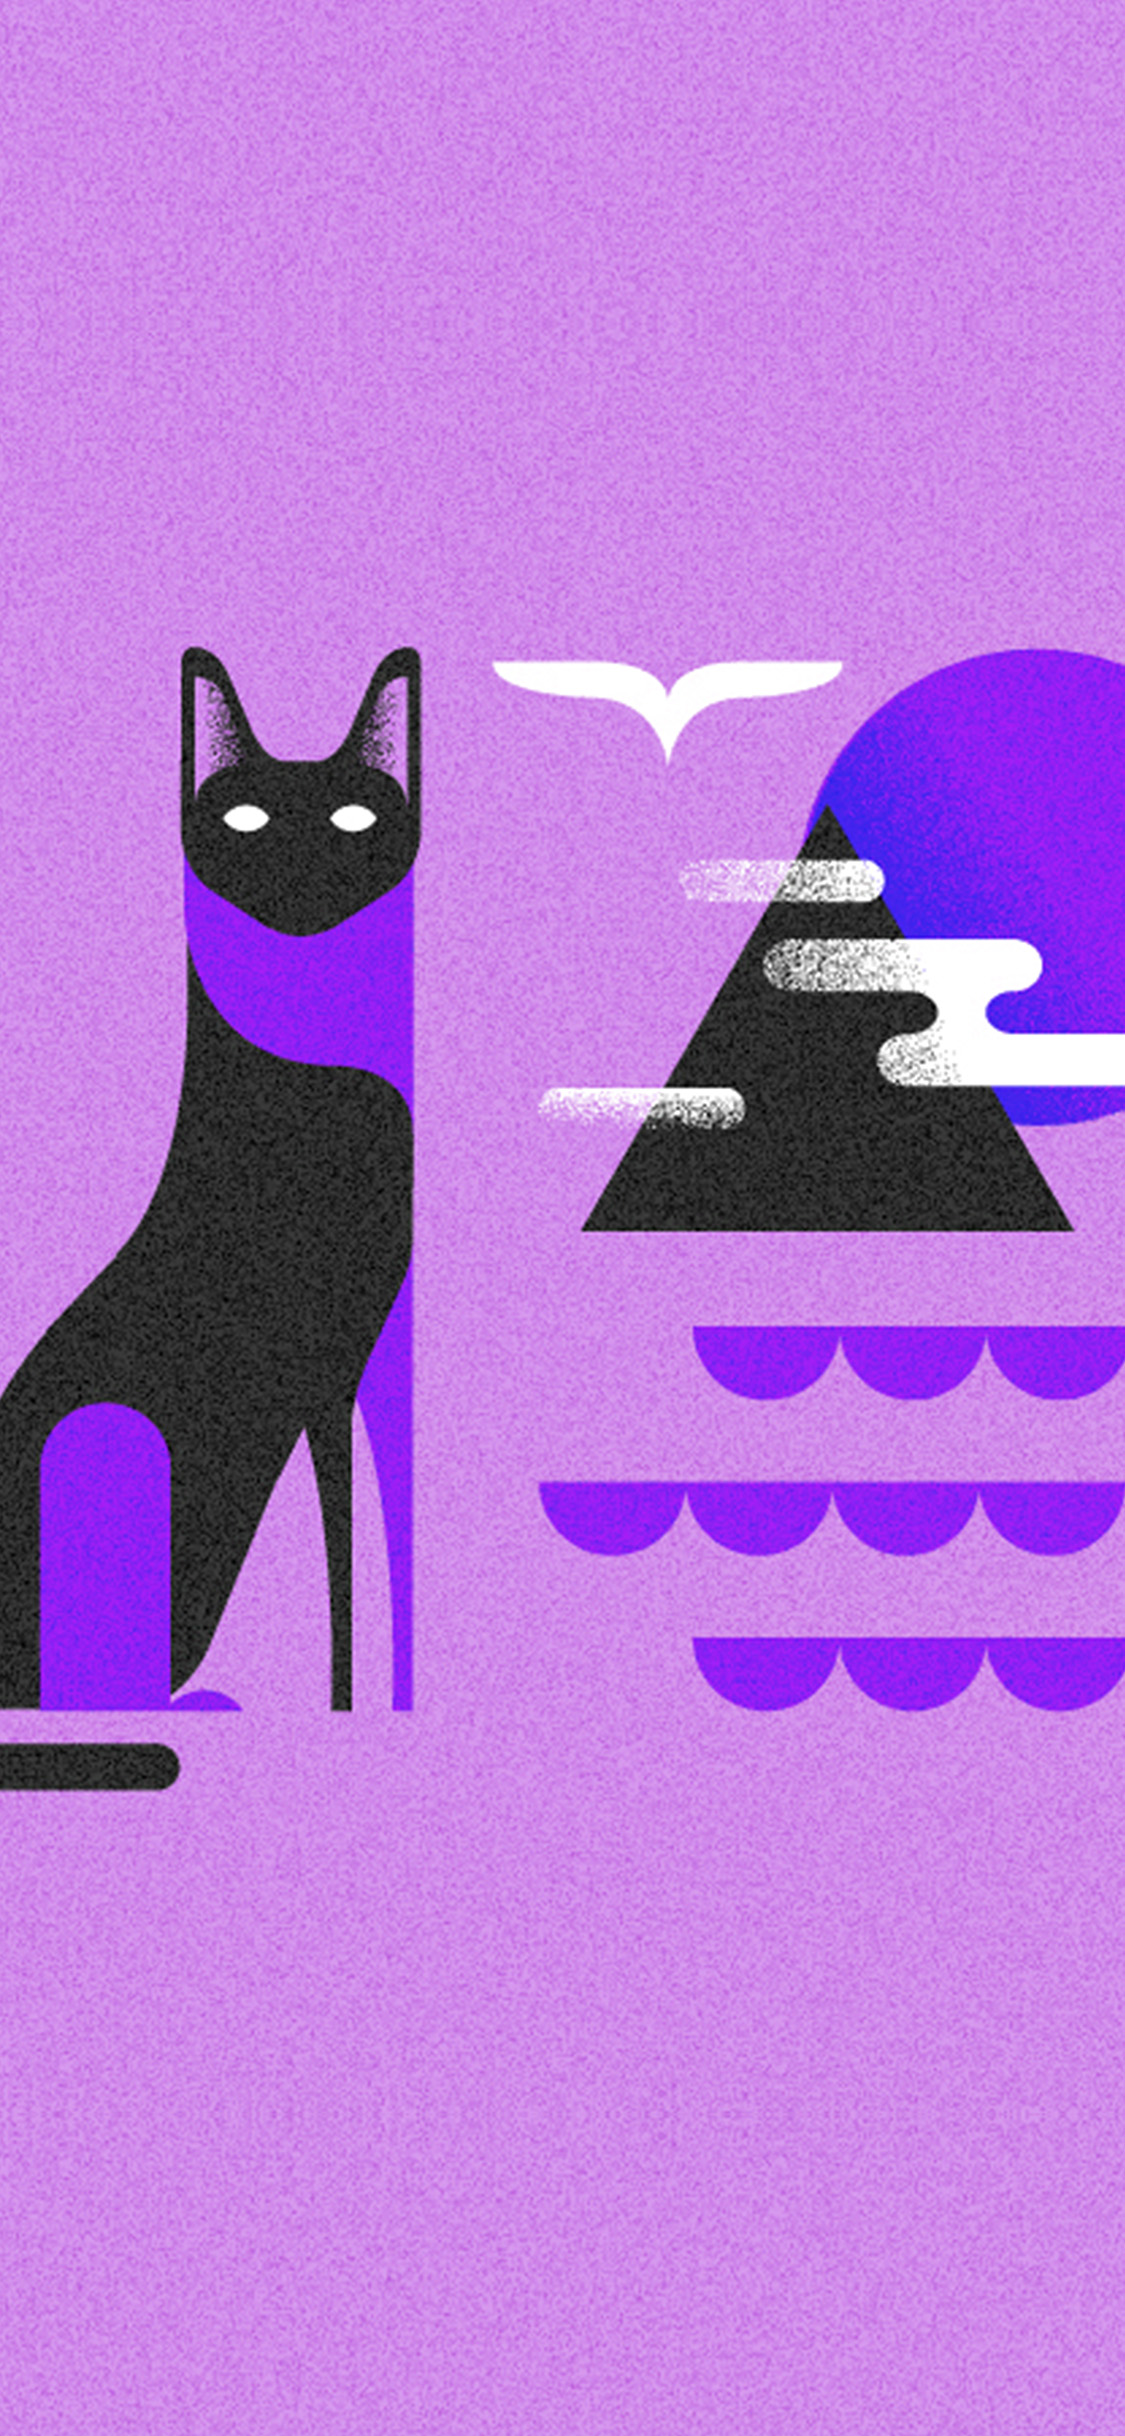 iPhone X wallpaper. art cat illust minimal simple purple